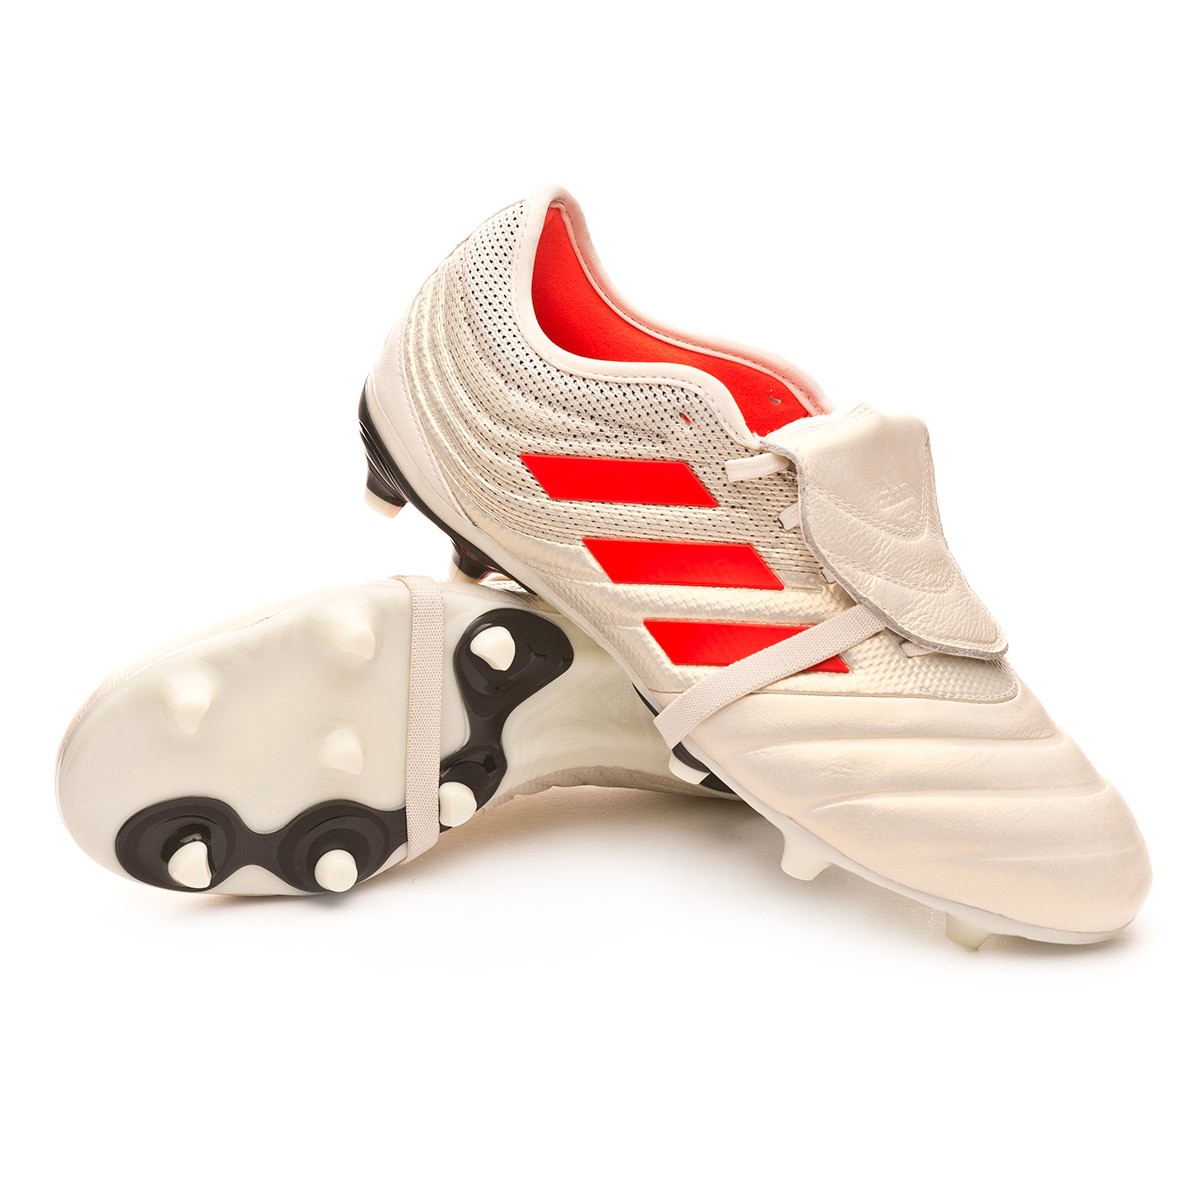 Football Boots adidas Copa Gloro 19.2 FG Off white-Solar red-Core black -  Football store Fútbol Emotion